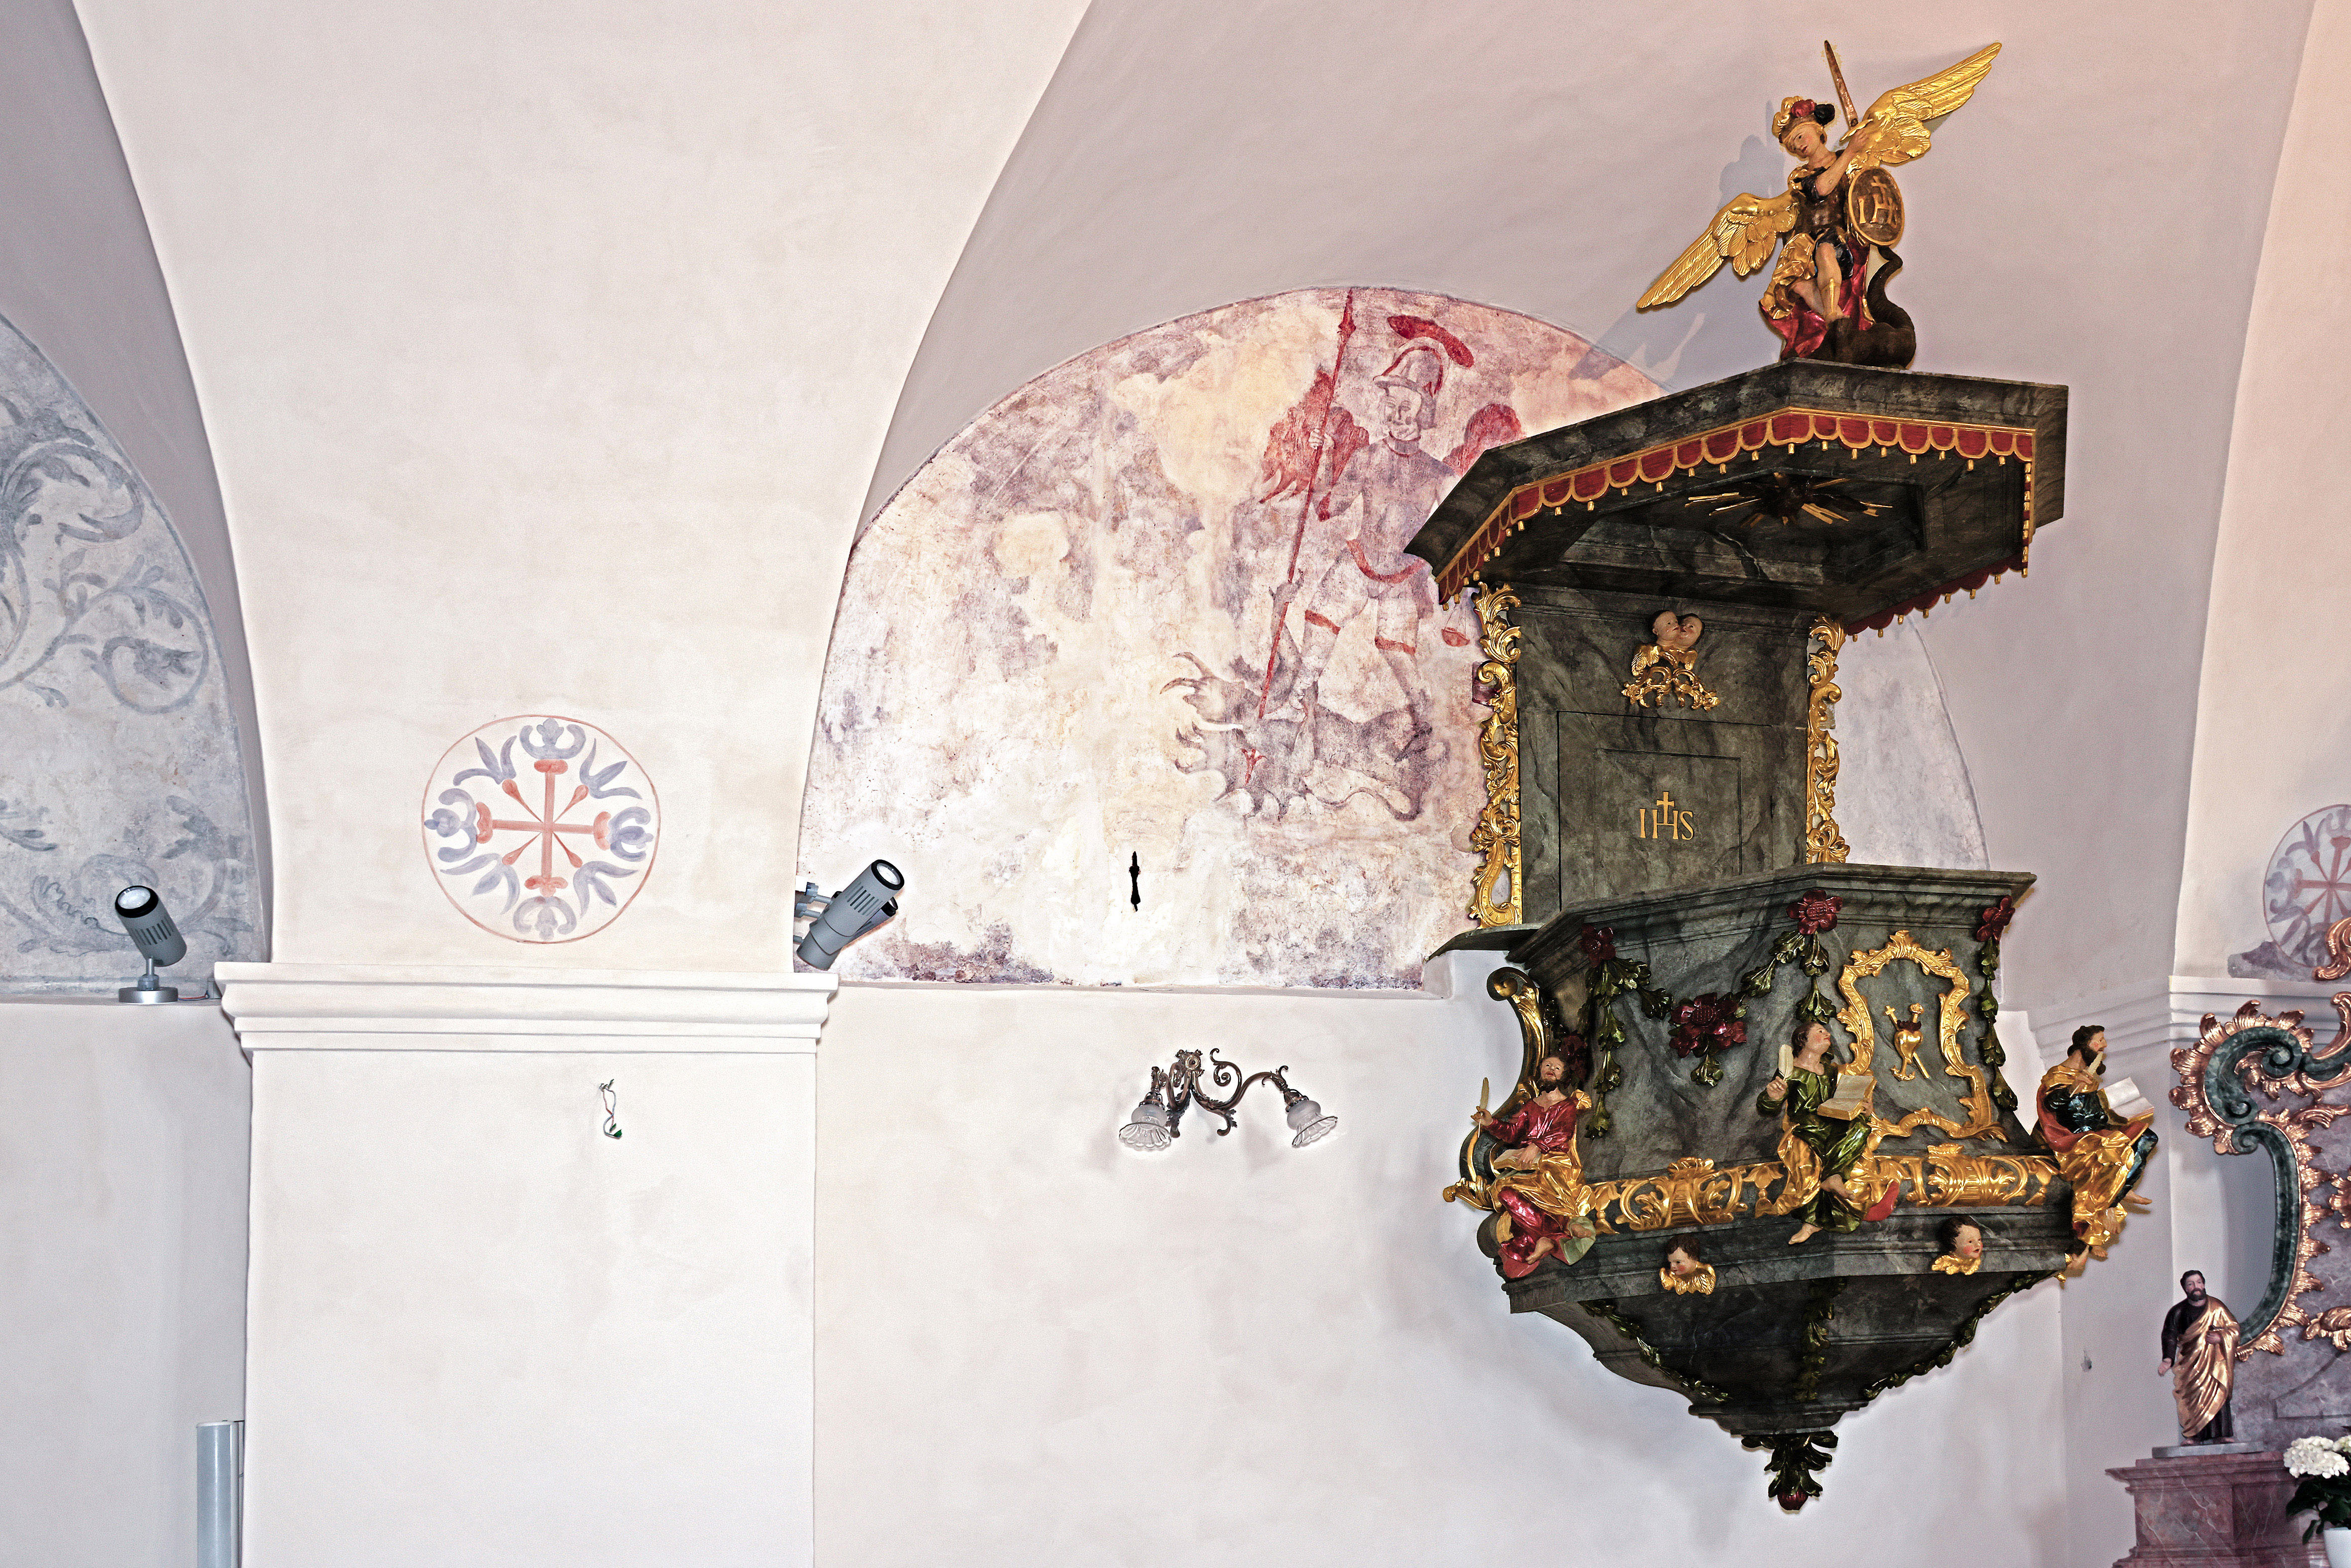 Erzengel Michael als Wandmalerei aus der Renaissance und als barocke Skulptur am Baldachin der Kanzel